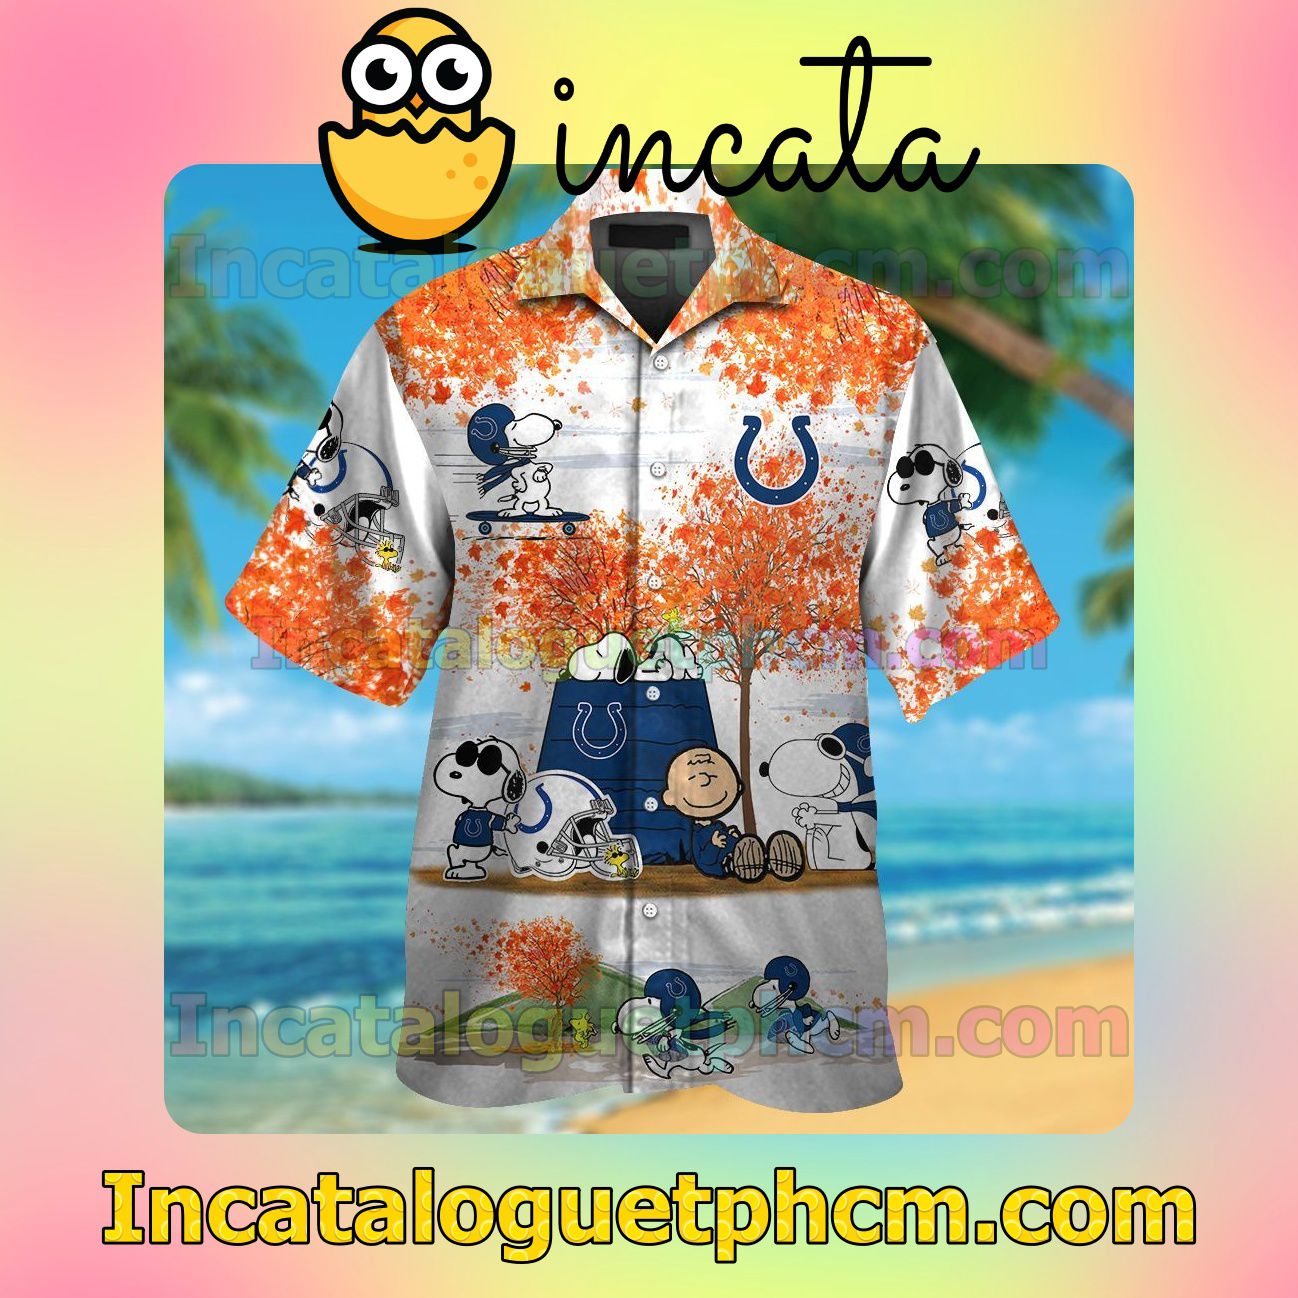 Indianapolis Colts Snoopy Autumn Beach Vacation Shirt, Swim Shorts